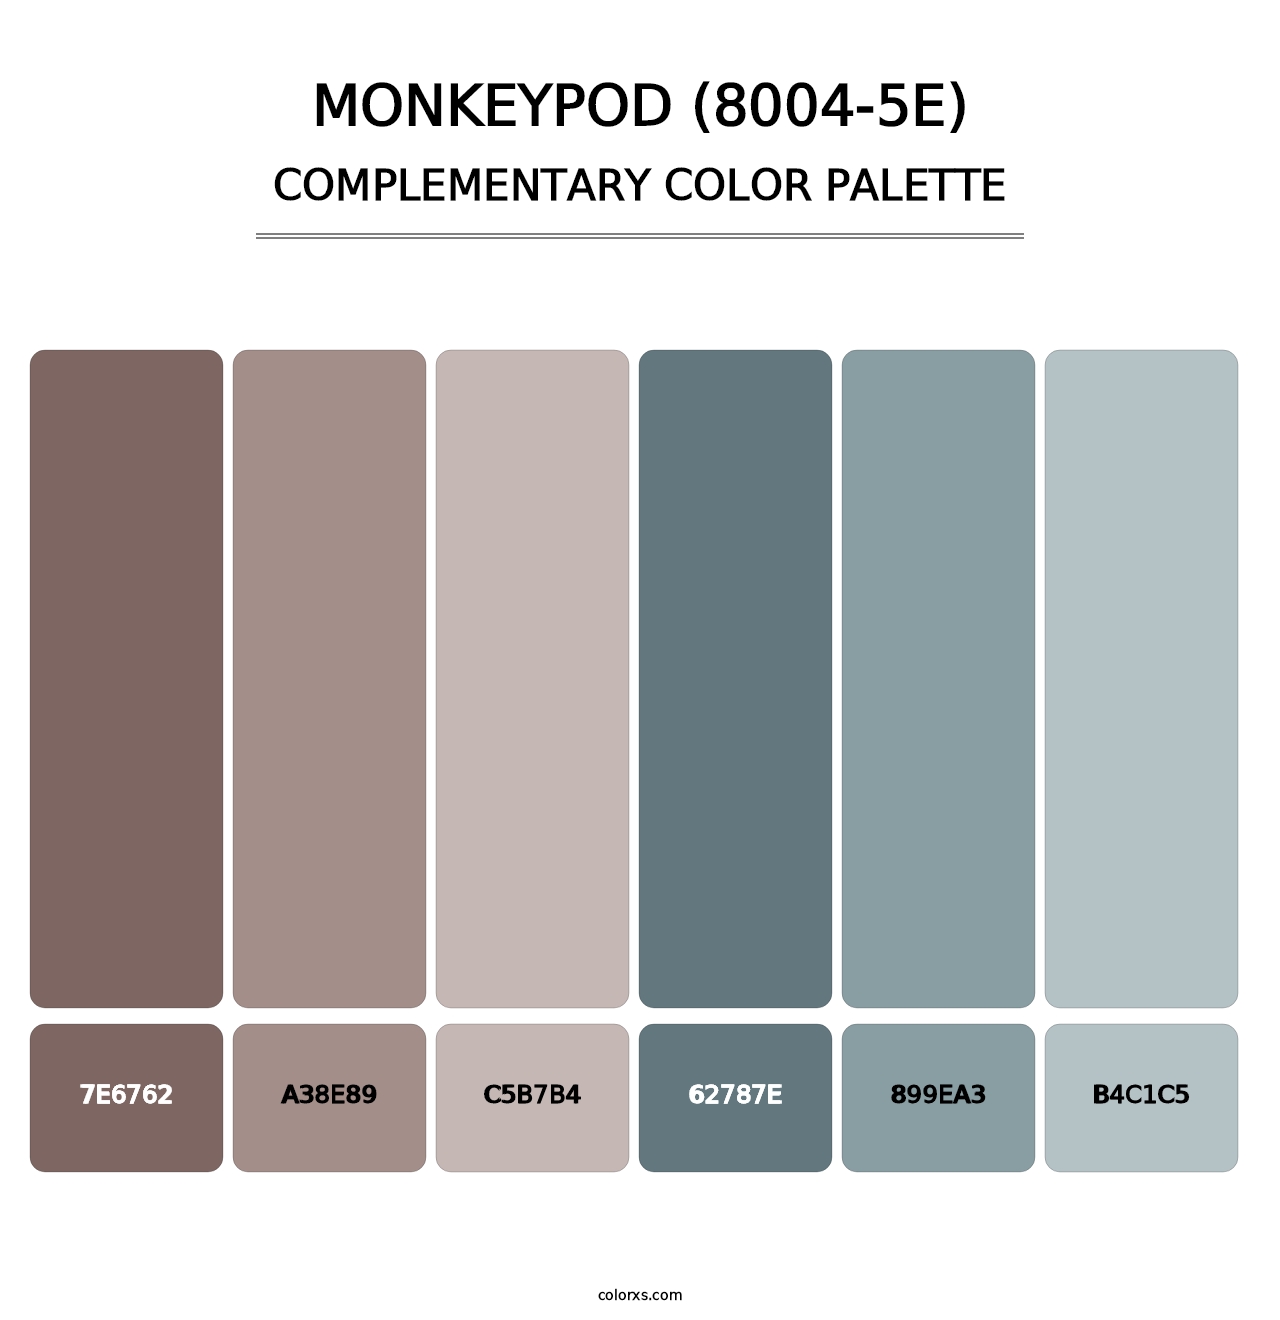 Monkeypod (8004-5E) - Complementary Color Palette